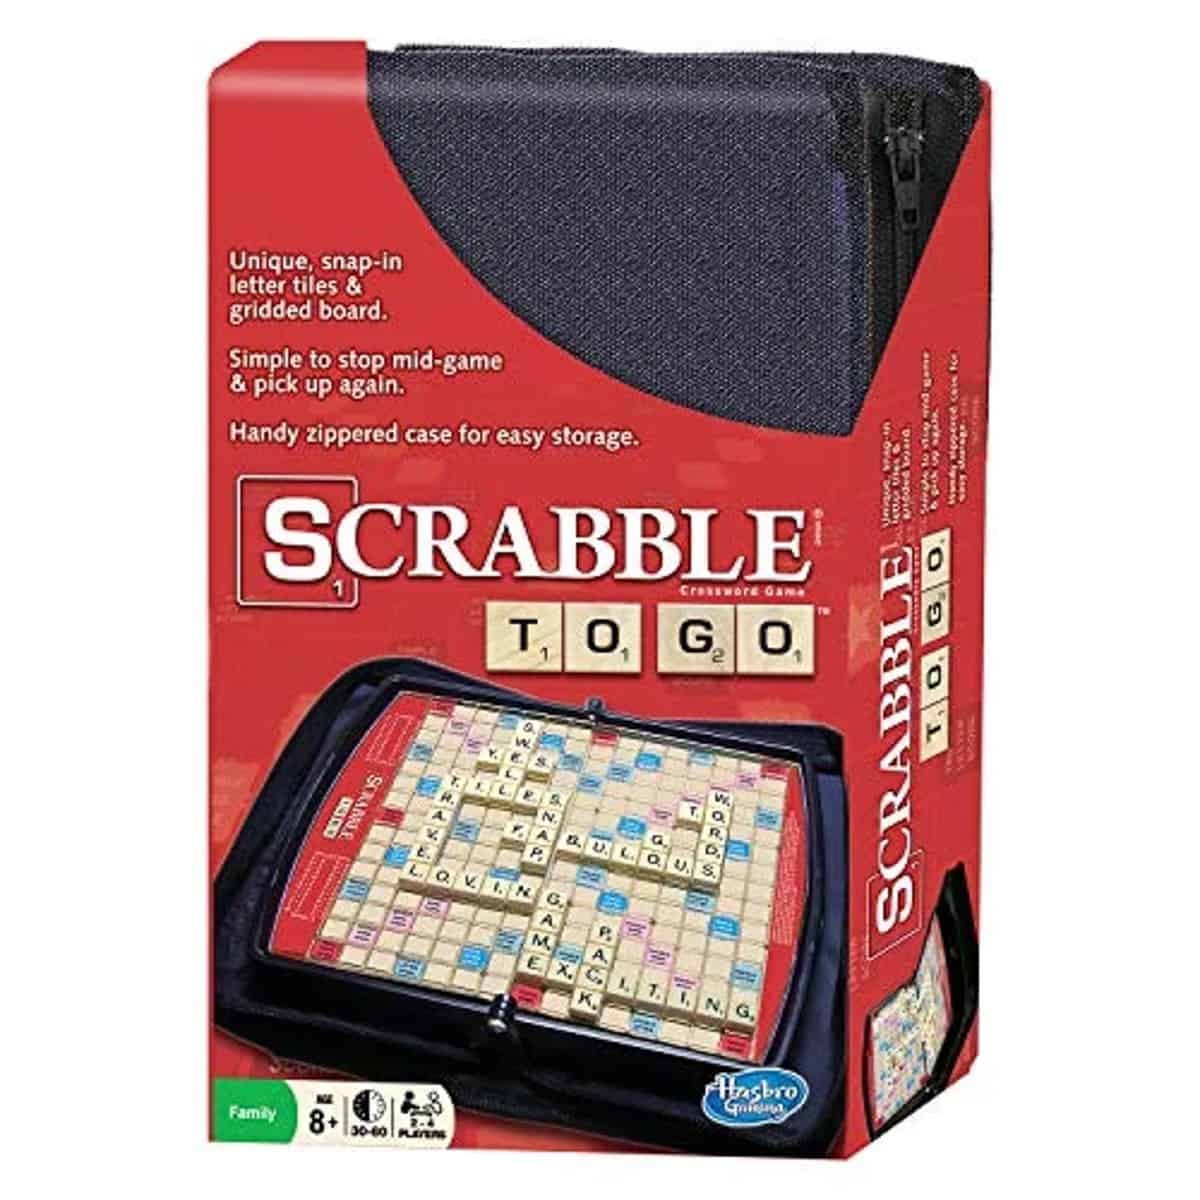 Scrabble to Go - a fun travel game